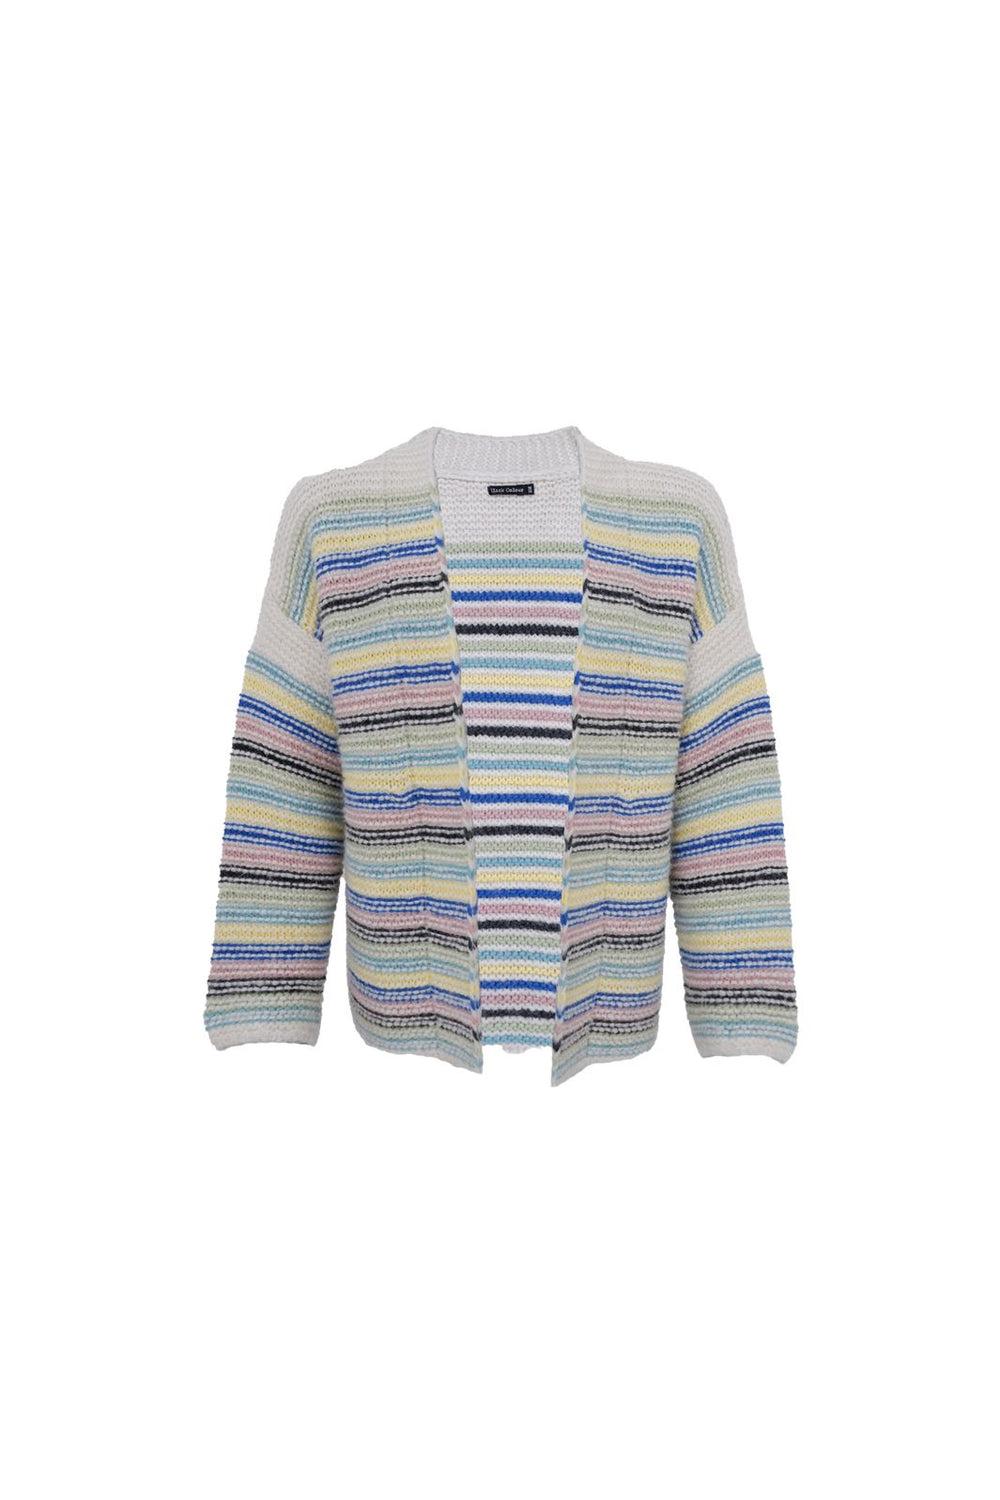 Black Colour - Bcgeorgia Knitted Cardigan - Multi Pastel